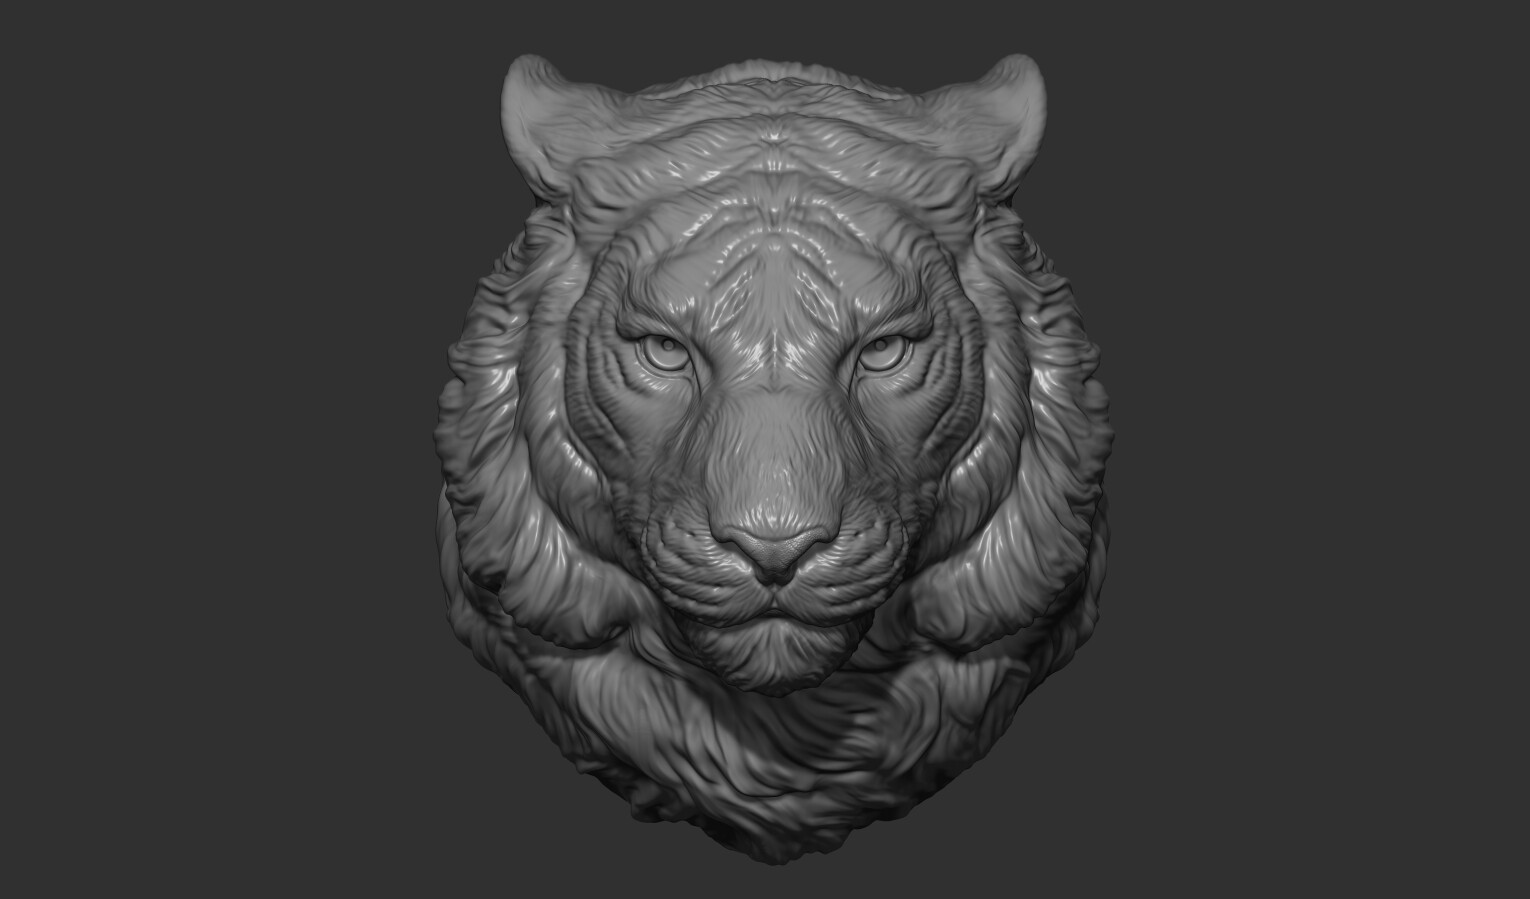 ArtStation - Tiger head pendant | Resources